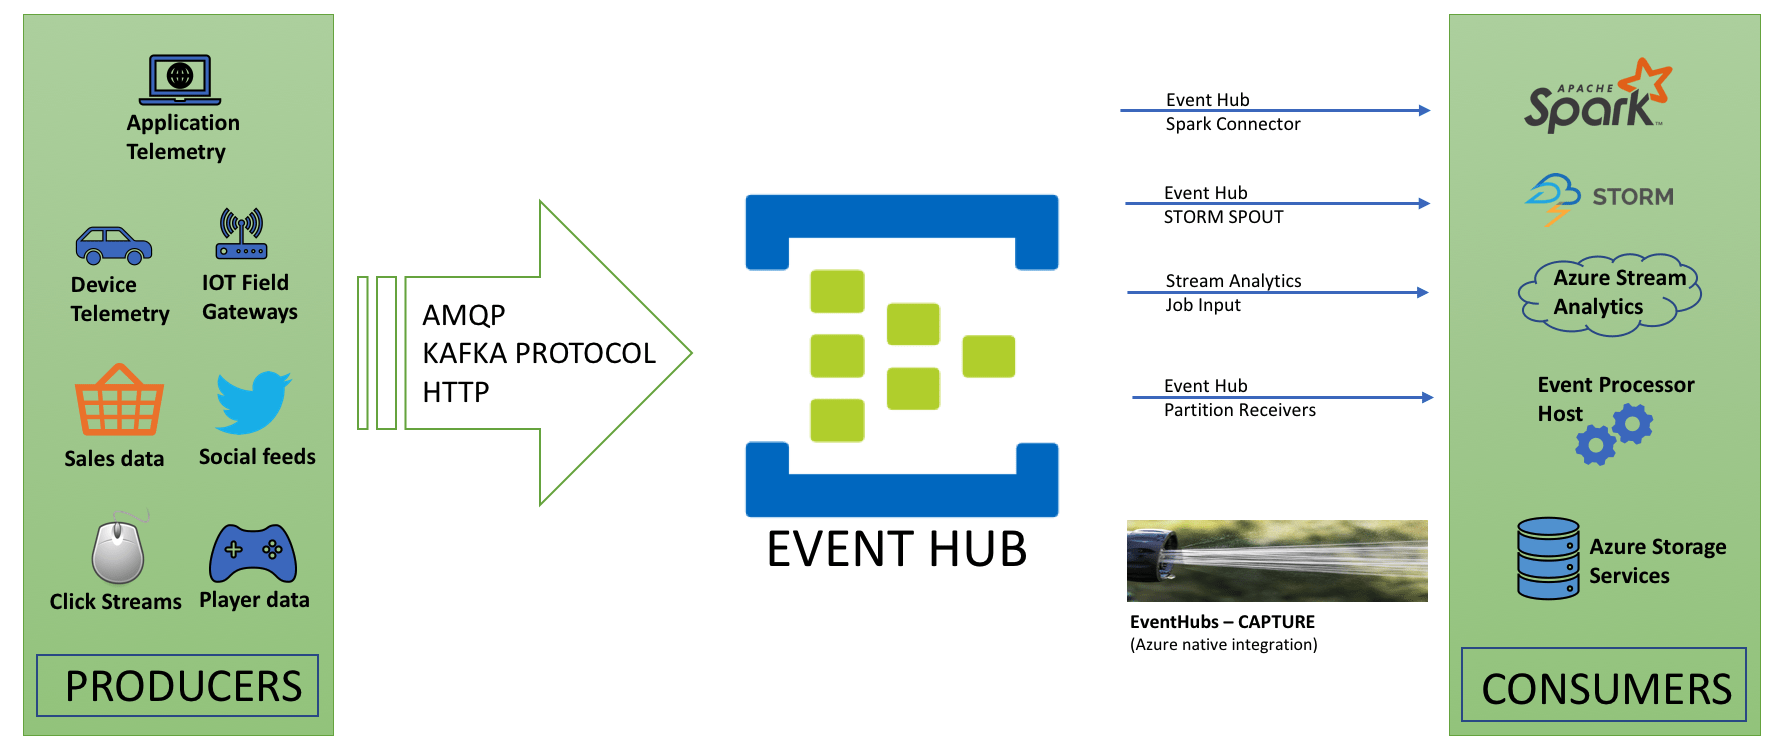 Azure Event Hub | Event Hub Architecture | Working